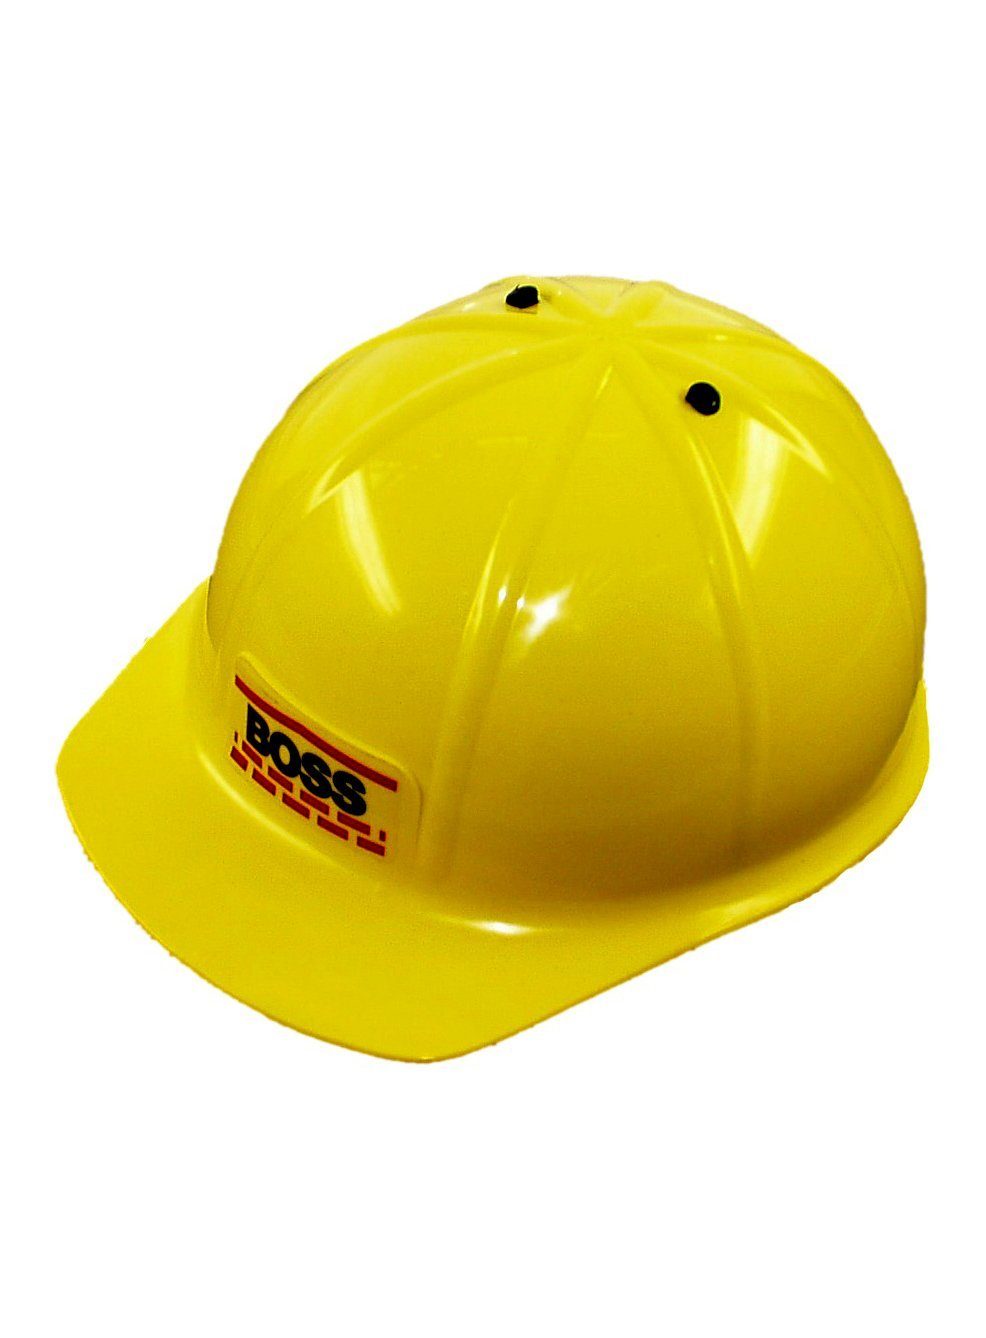 Leipold + Döhle Metamorph Kostüm Bauarbeiter Helm, Robuster Helm für 'Boss der Baumeister'